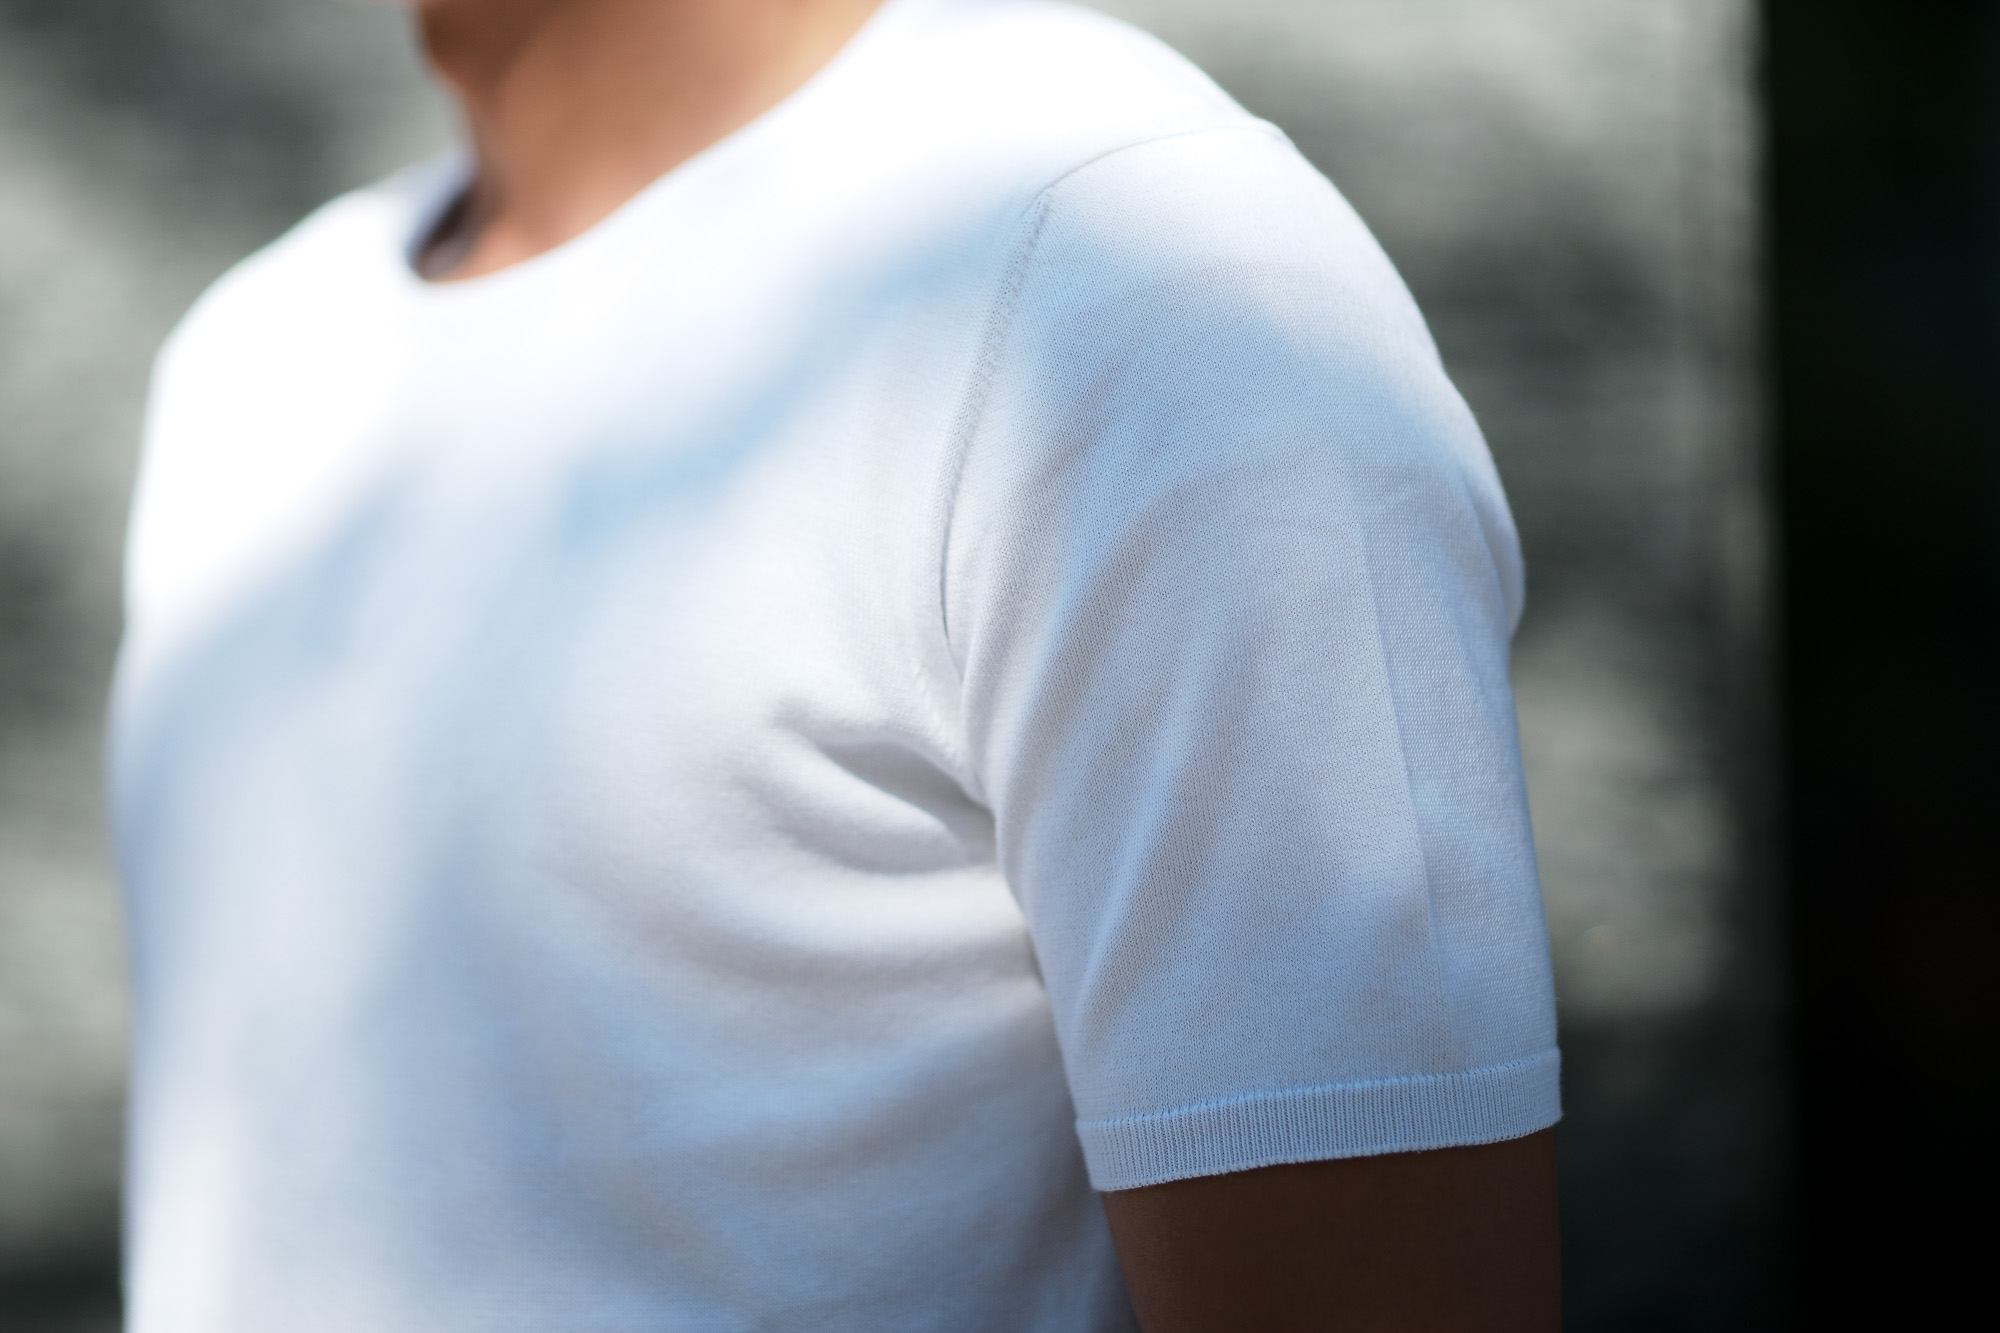 Cruciani (クルチアーニ) Knit T-shirt (ニット Tシャツ) 27ゲージ コットン ニット Tシャツ WHITE (ホワイト・Z0001) made in italy (イタリア製) 2019 春夏新作 愛知 名古屋 altoediritto アルトエデリット